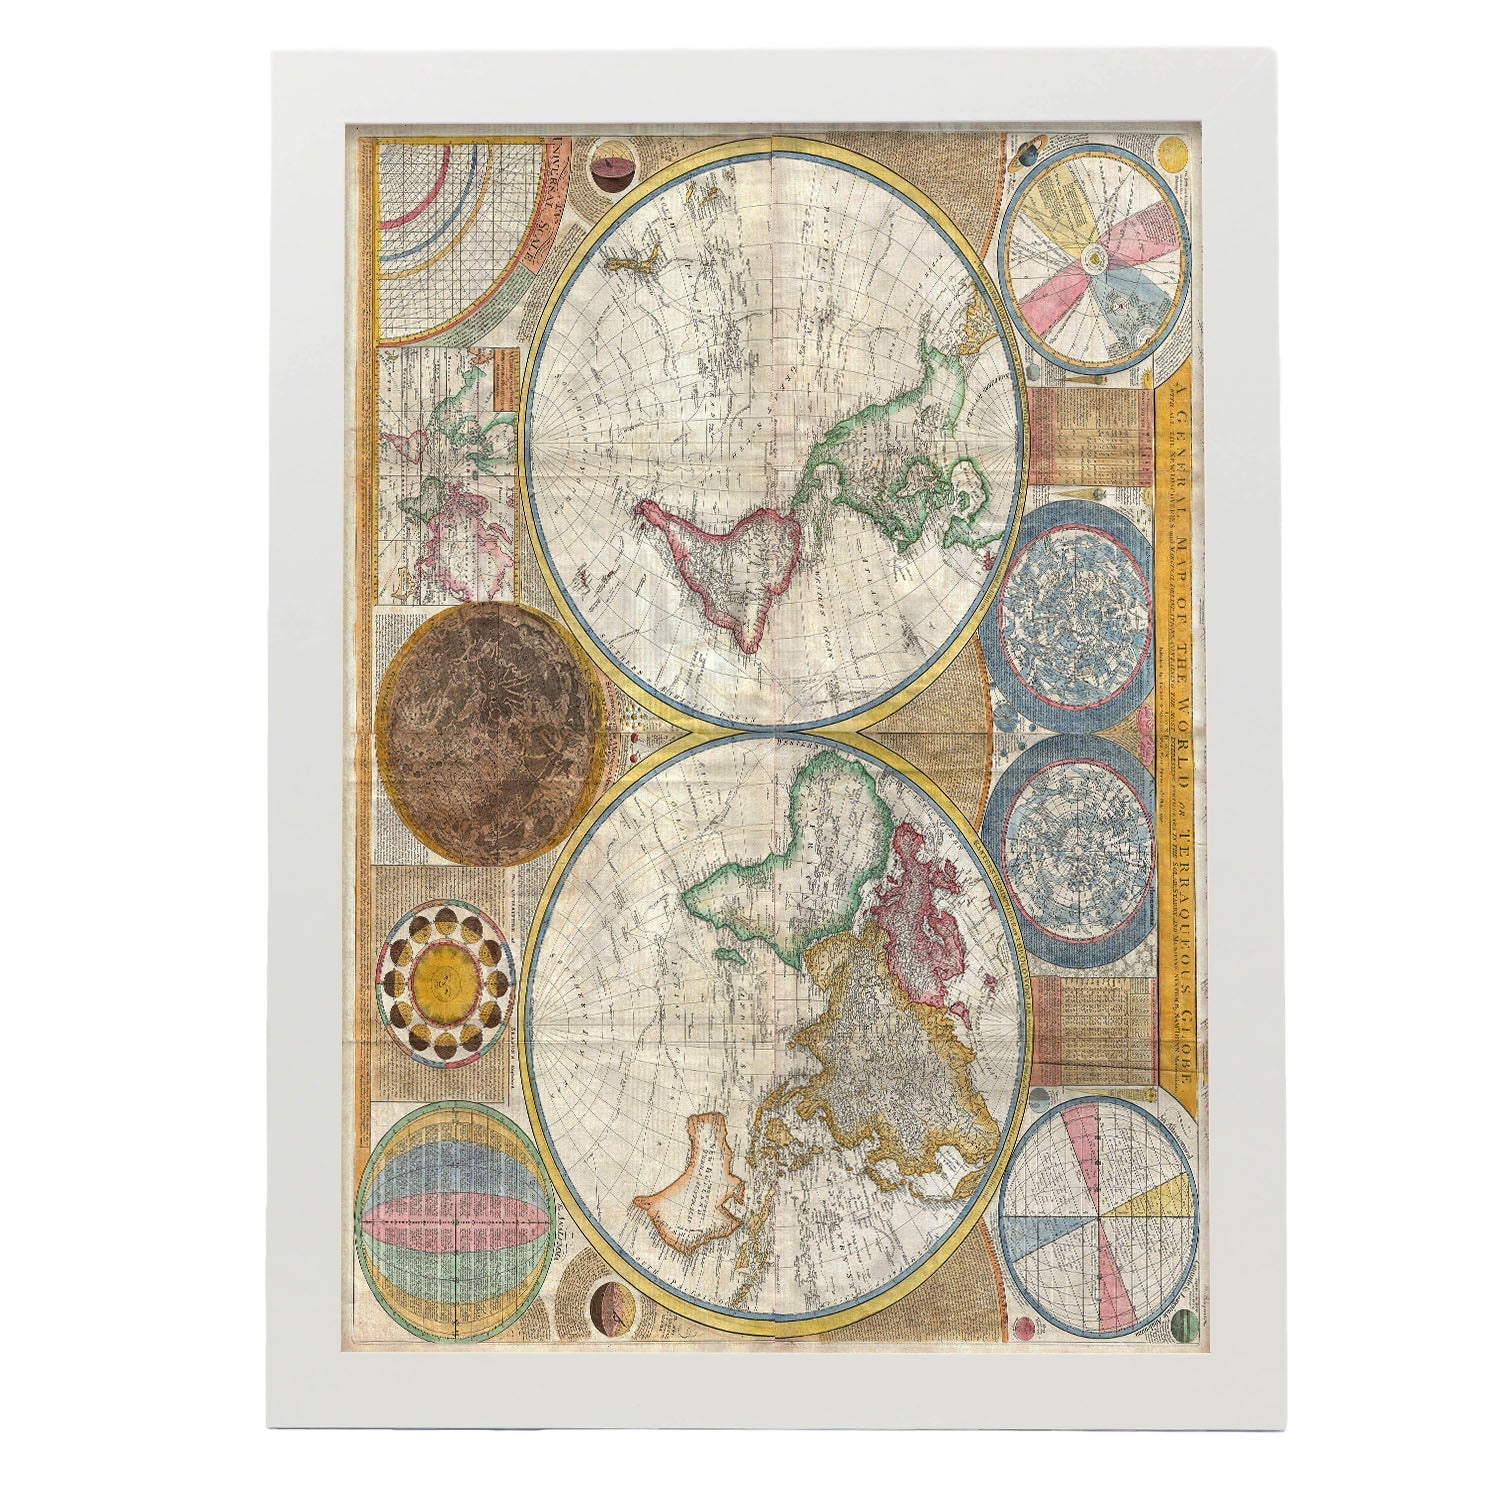 1794_Samuel_Dunn_Wall_Map_of_the_World_in_Hemispheres_-1794-Artwork-Nacnic-A3-Marco Blanco-Nacnic Estudio SL